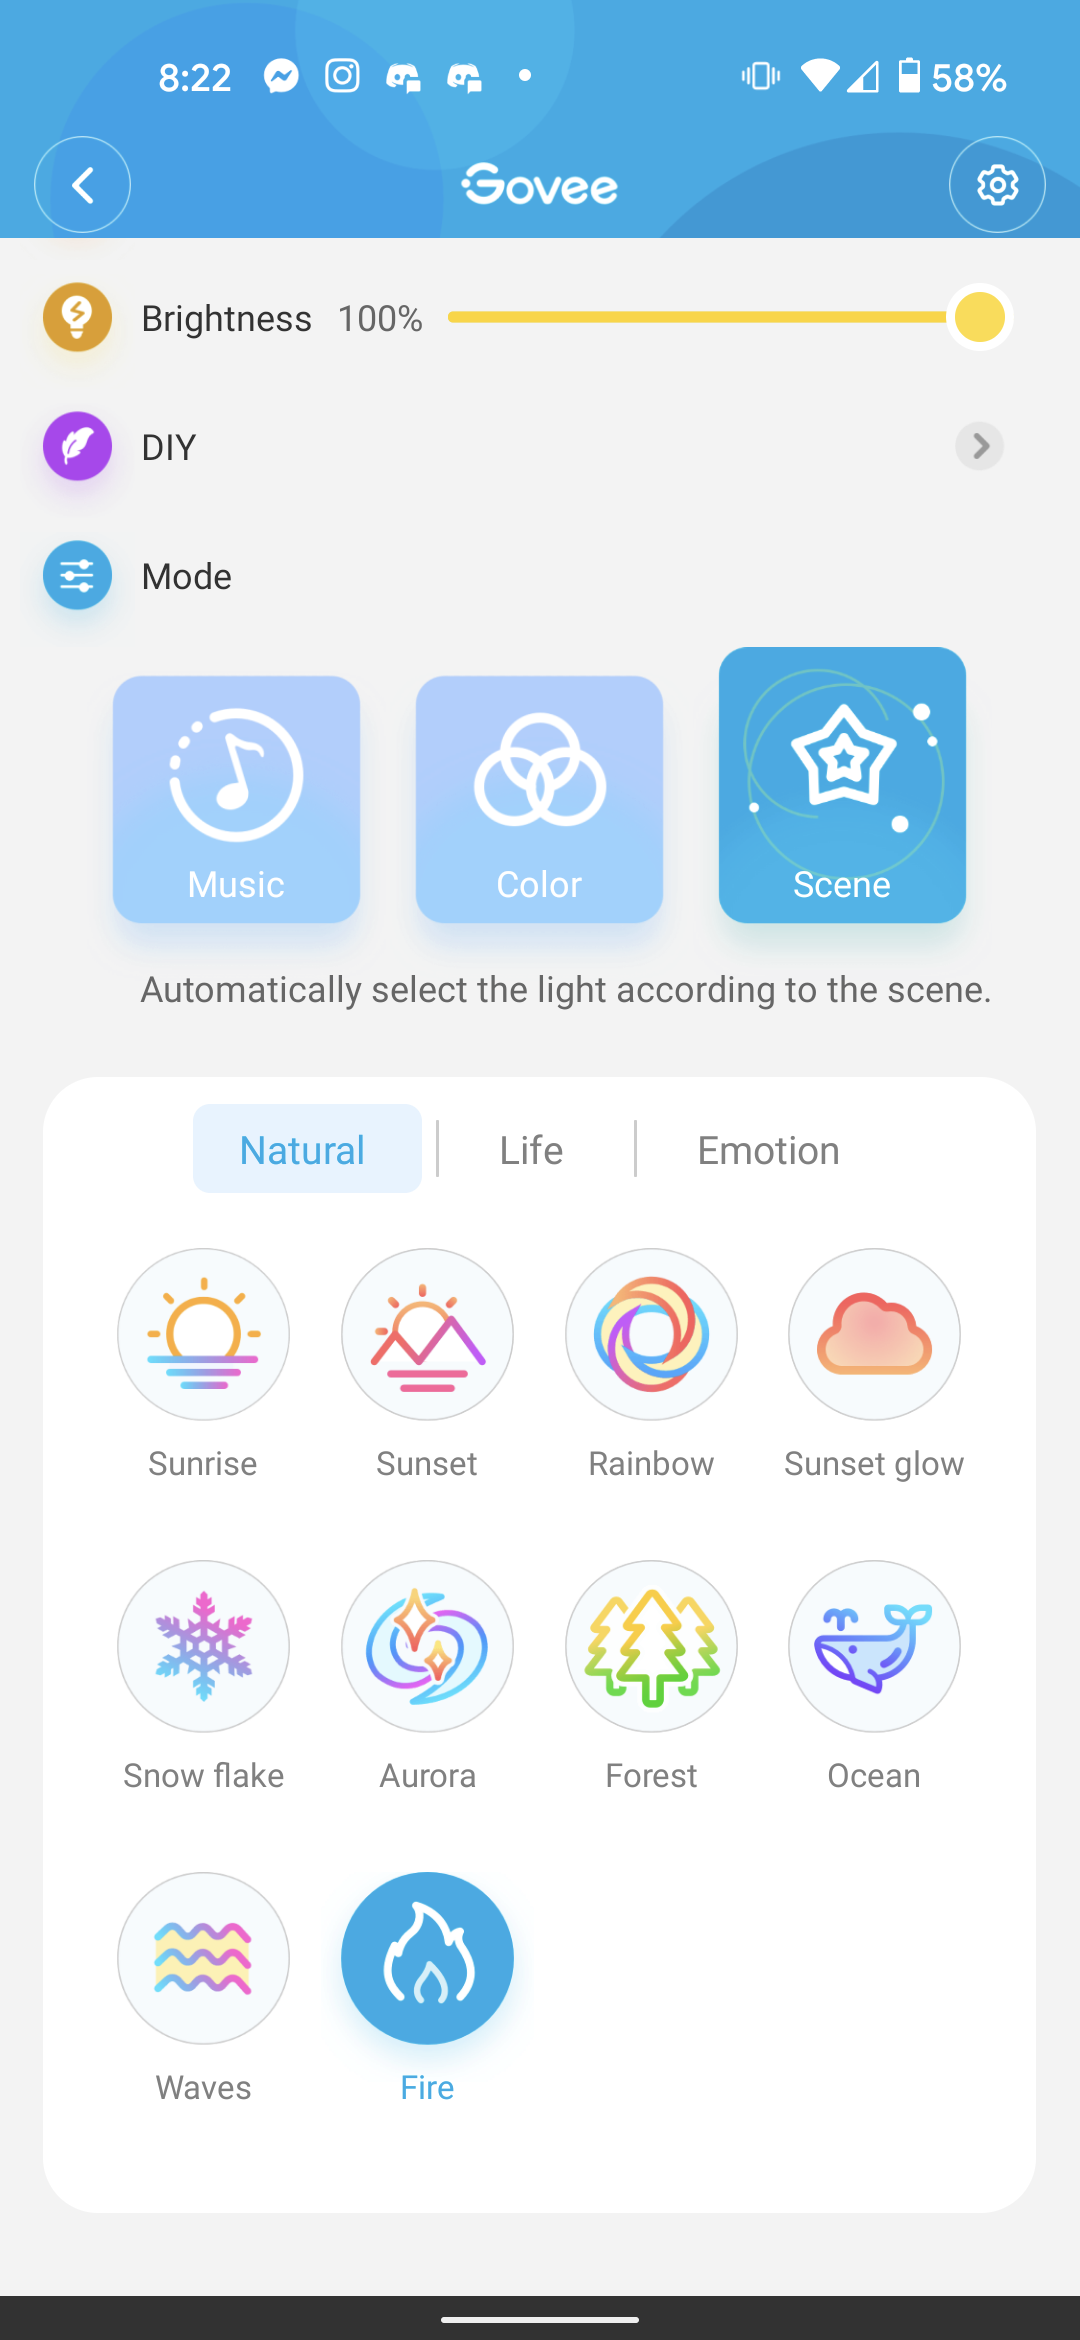 Aplikasi Govee menampilkan adegan Aura Lamp